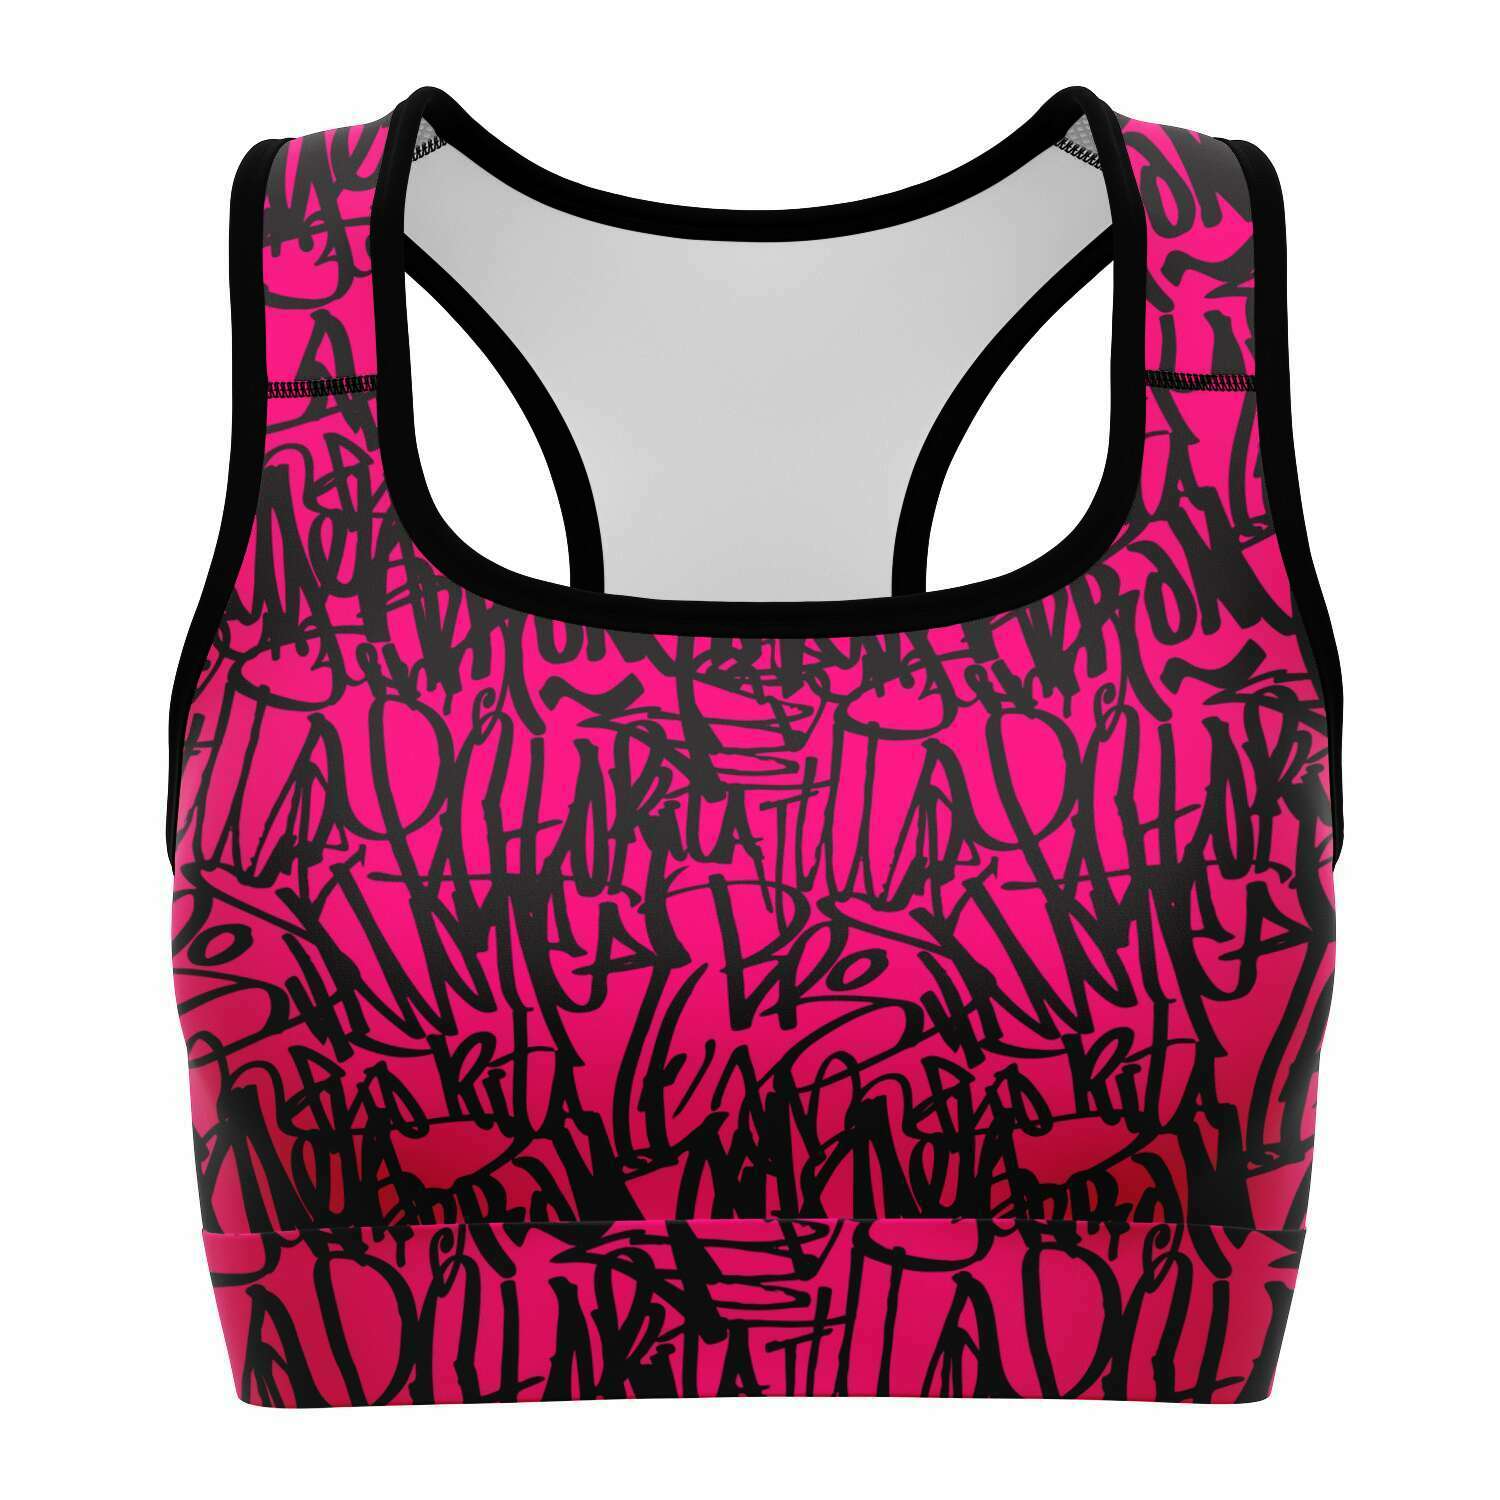 Pink Soda Sports Melrose medium support cross back bra in black